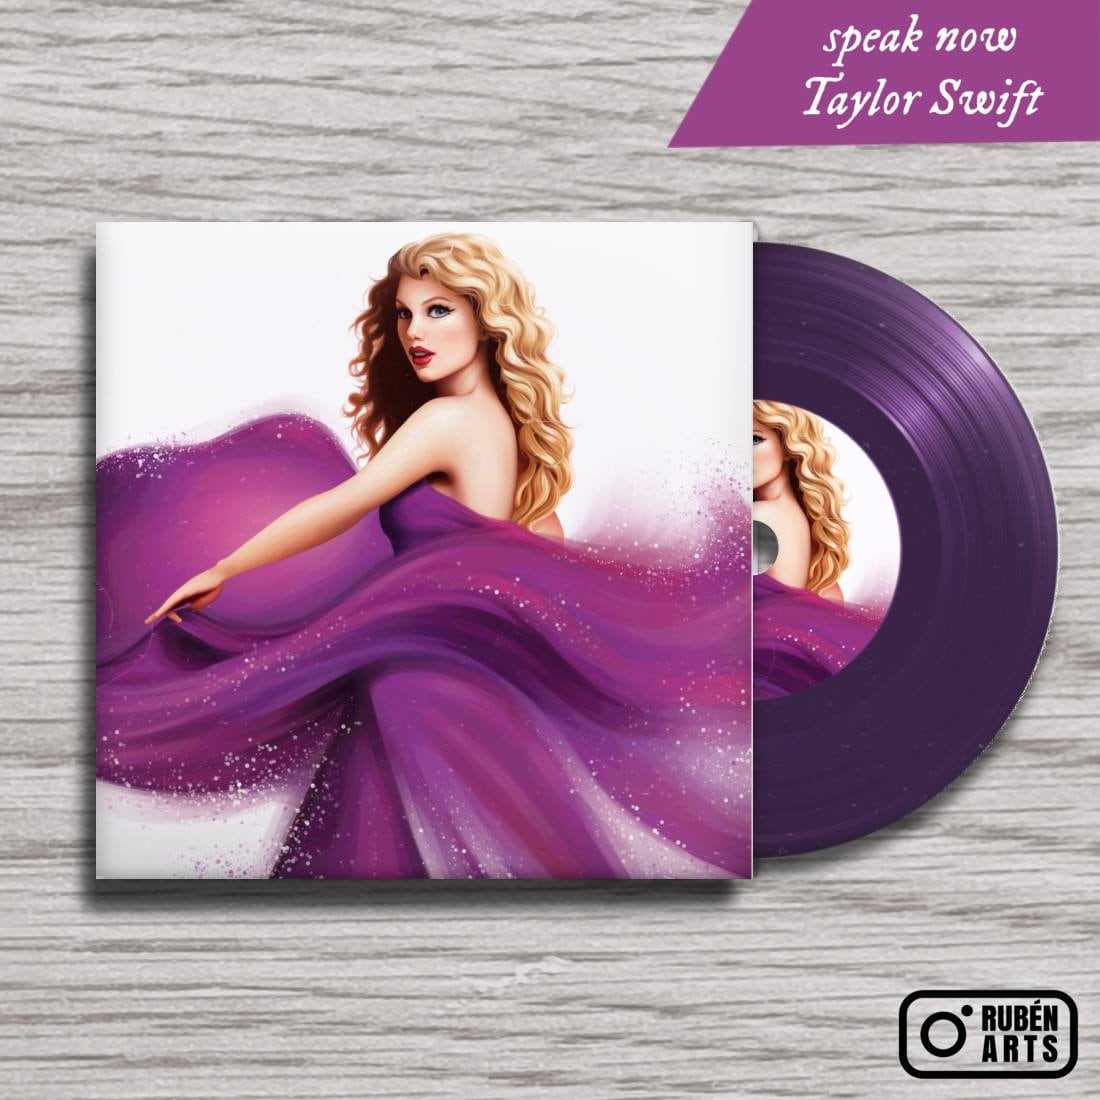 art.off.the.paige / Olivia on X: Taylor Swift Debut album custom Funko Pop!  💙 . #taylor #swift #taylorswift #swiftie #swifties #taylornation #lover  #reputation #folklore #evermore #art #artist #customfunkopop #funko  #funkopop #pop